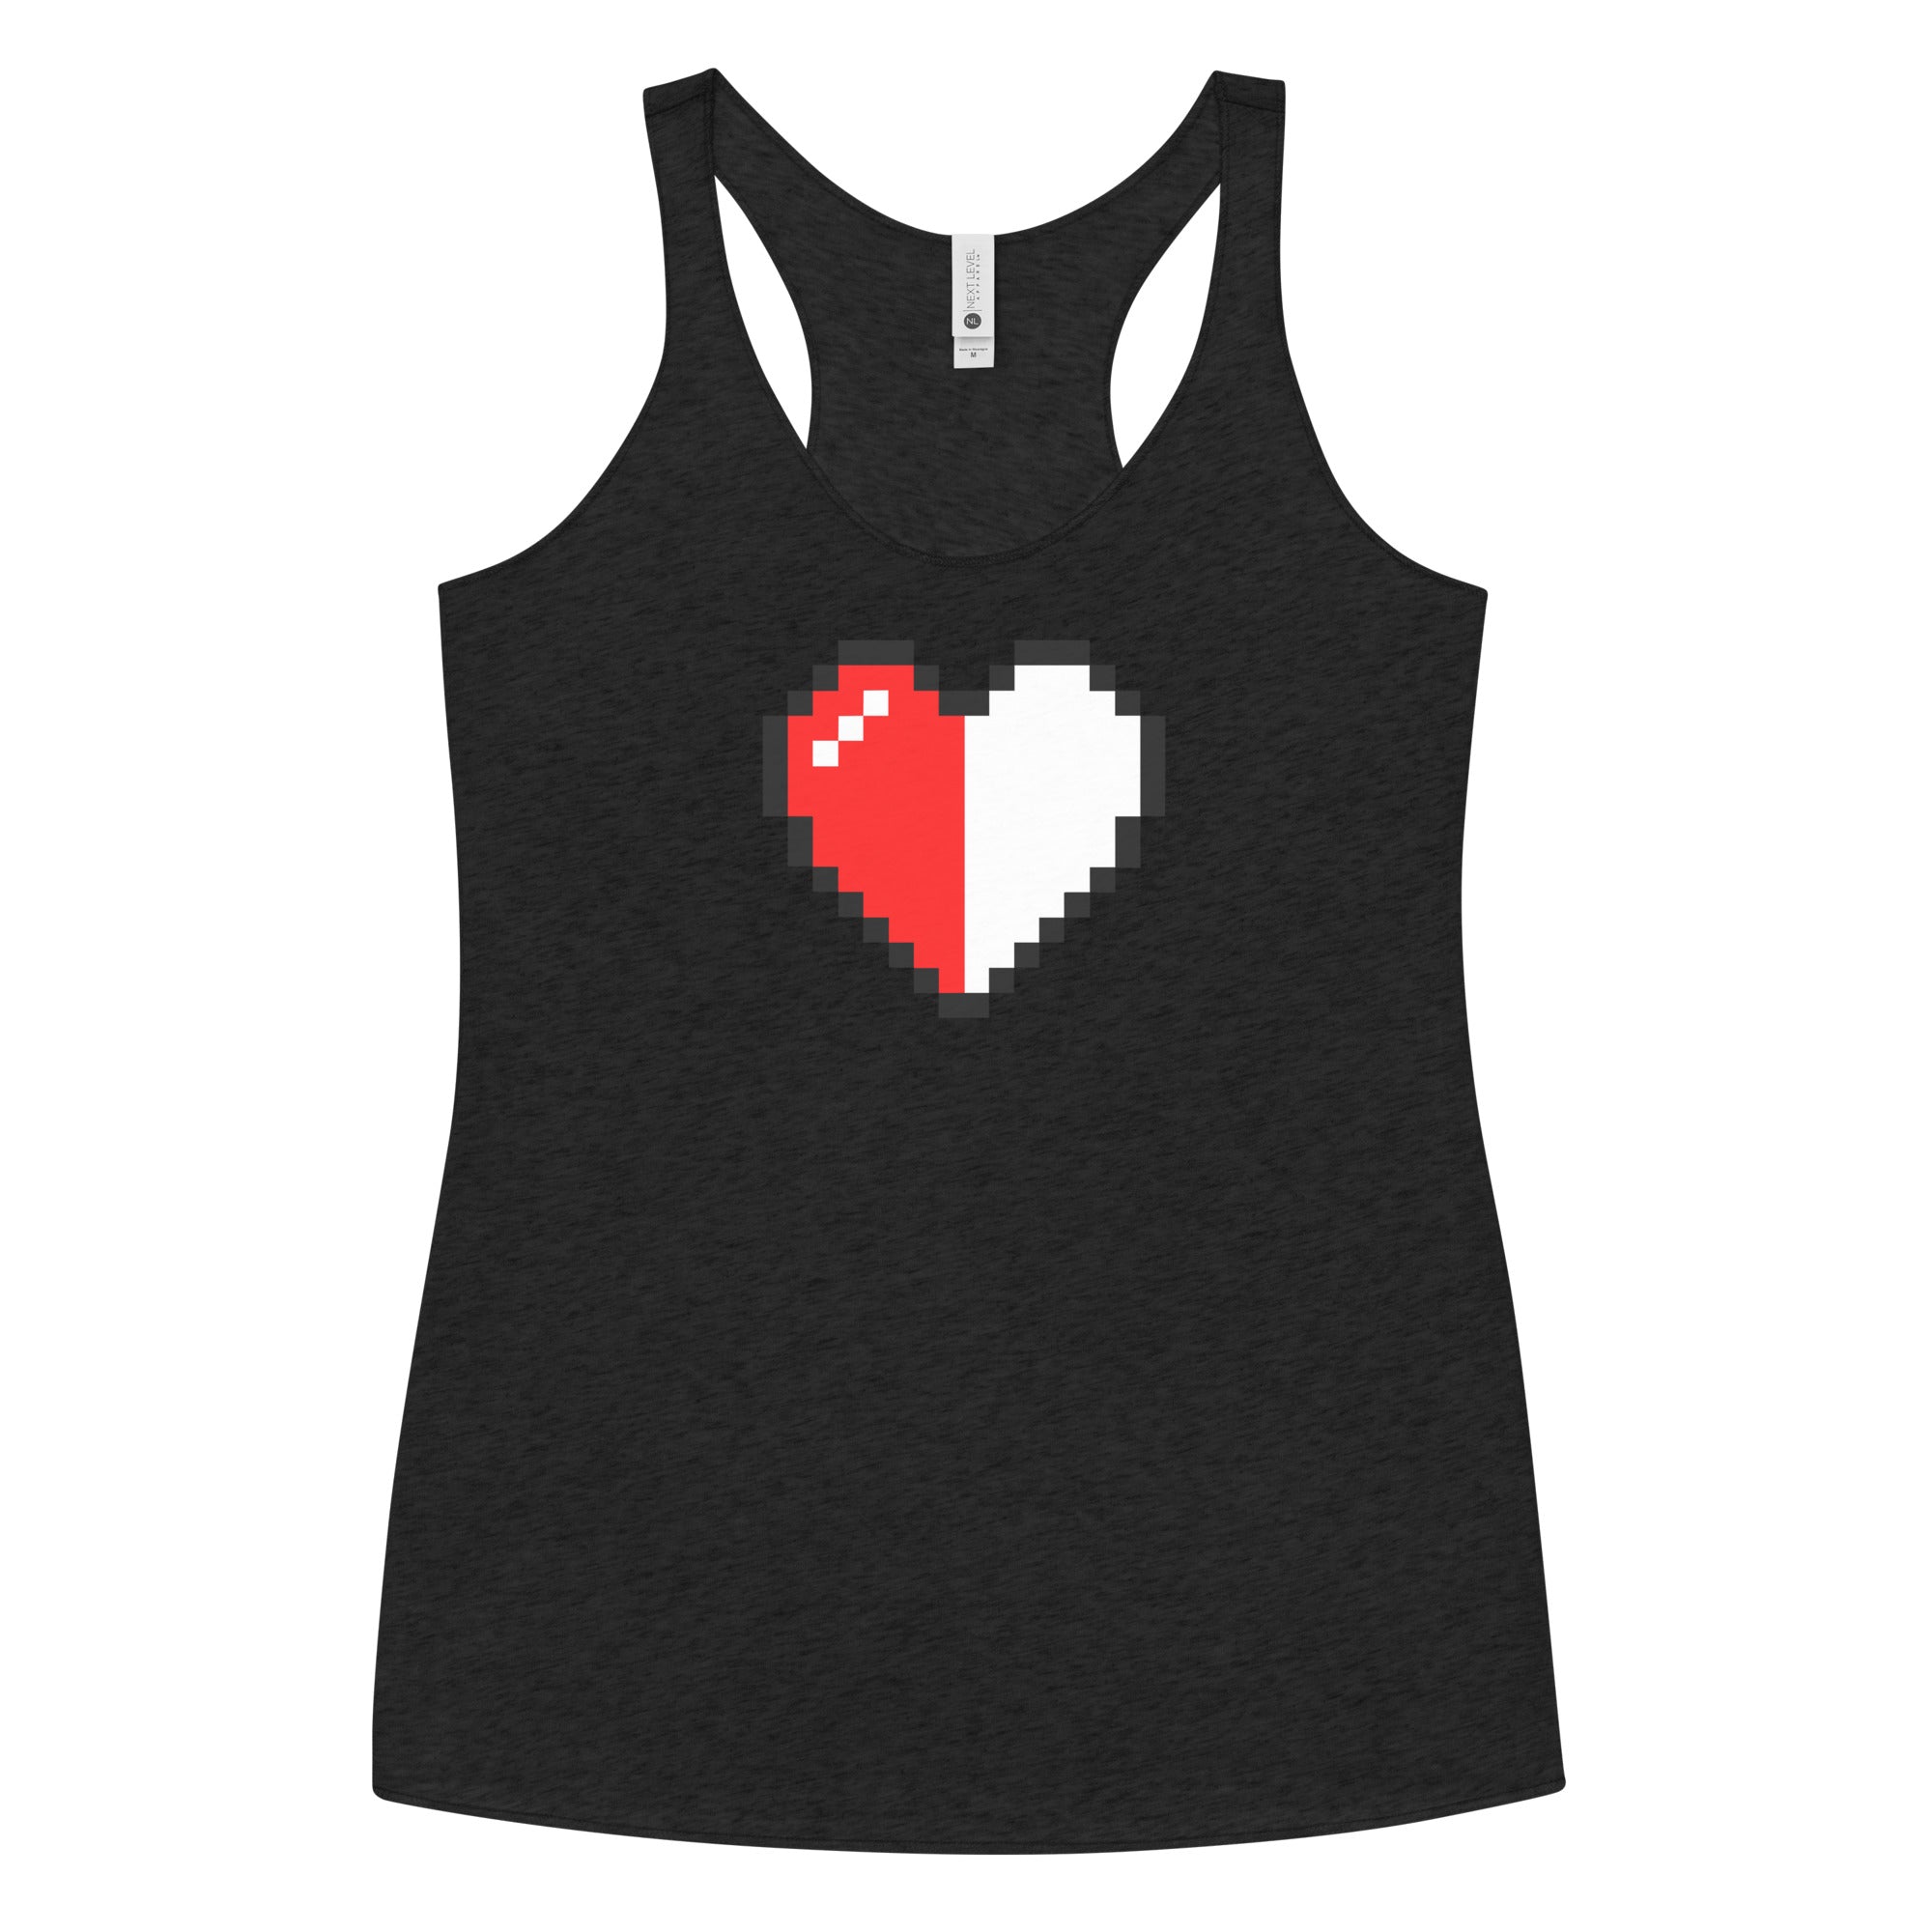 Retro 8 Bit Video Game Pixelated Half Heart Women's Racerback Tank Top Shirt